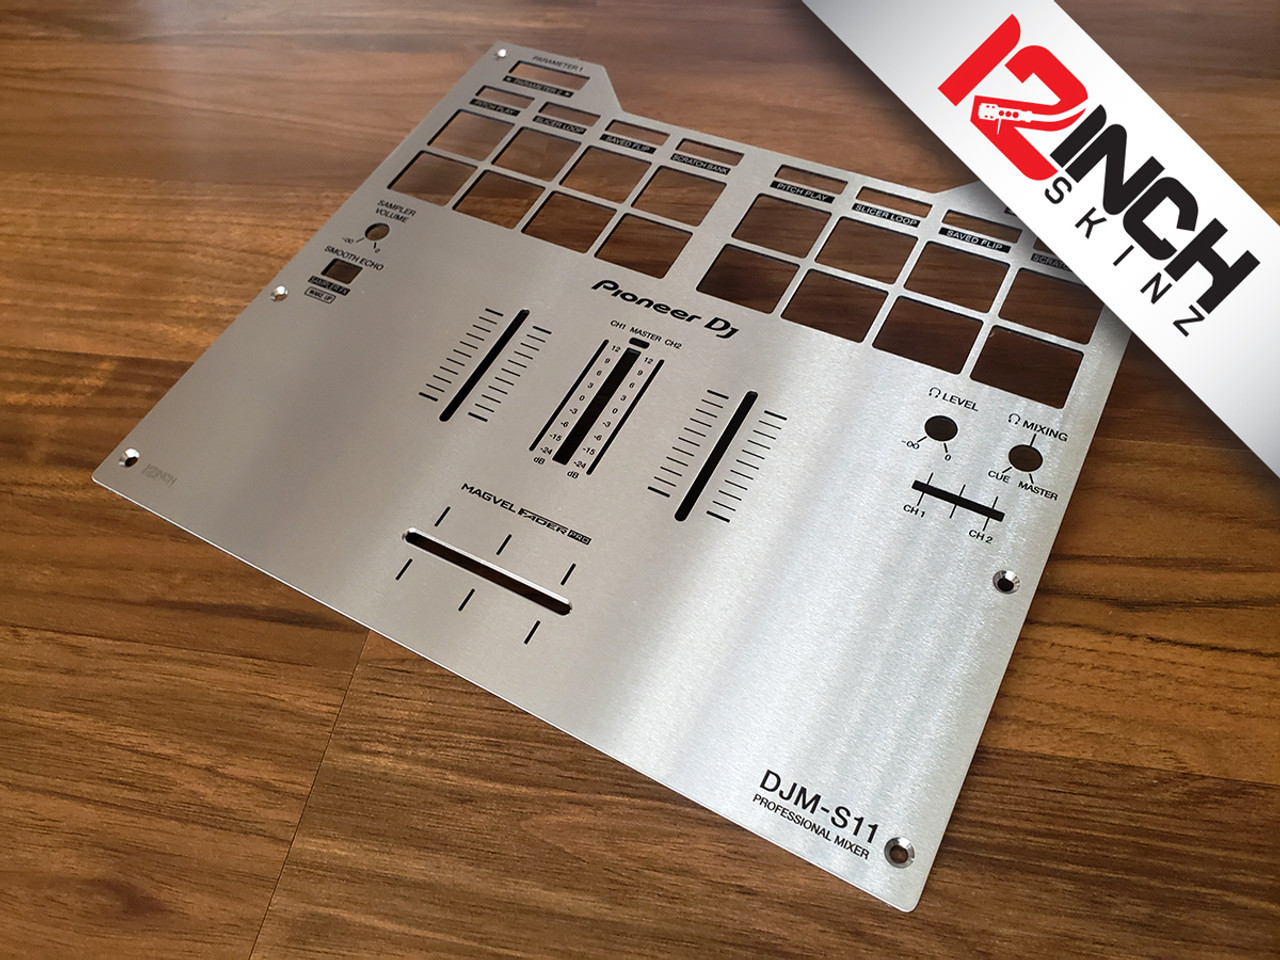 Pioneer DJM-S11 Stainless Steel Fader Plate